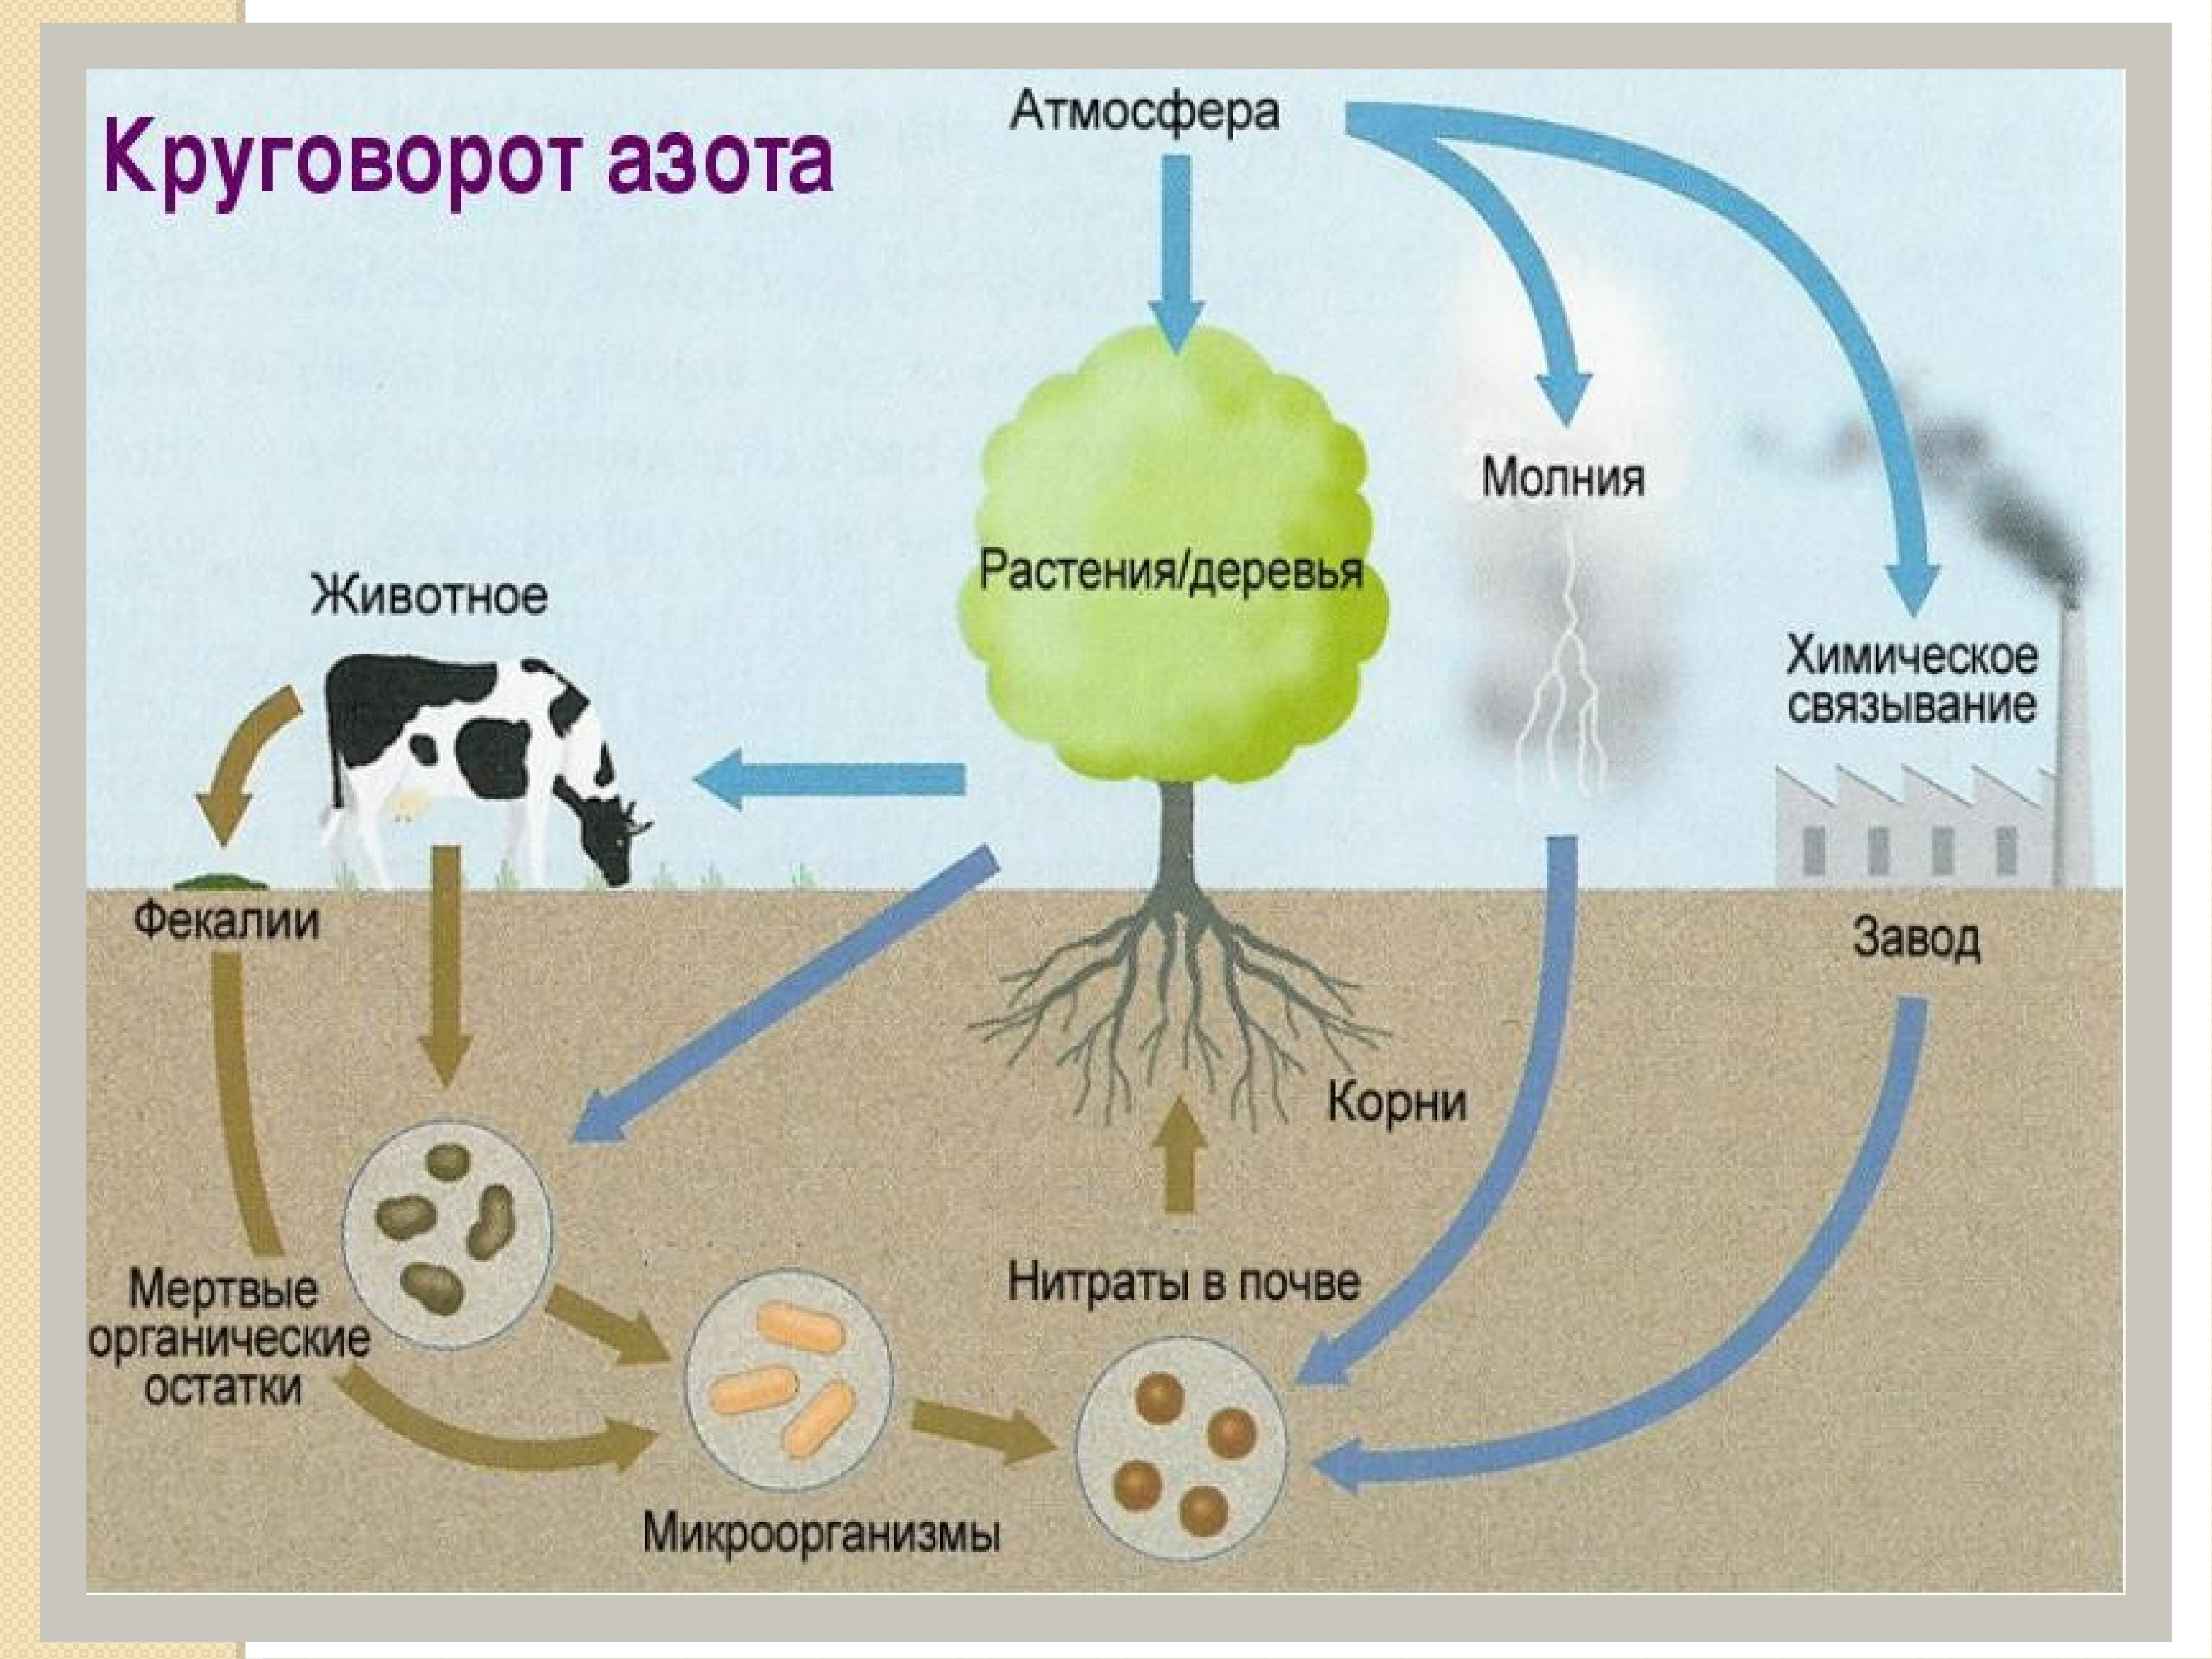 Бактерии и углерод. Крговорот ахота в природе. Ч, Хема круговорот азота в природе. Схема круговора ахота в природе. Биологический круговорот азота в природе.